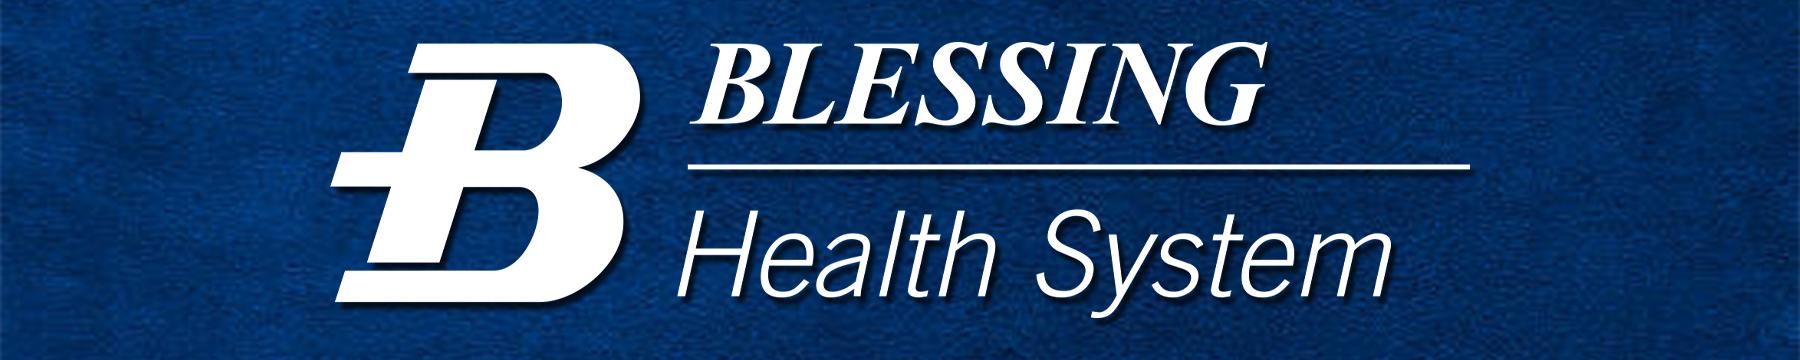 Blessing Health System banner